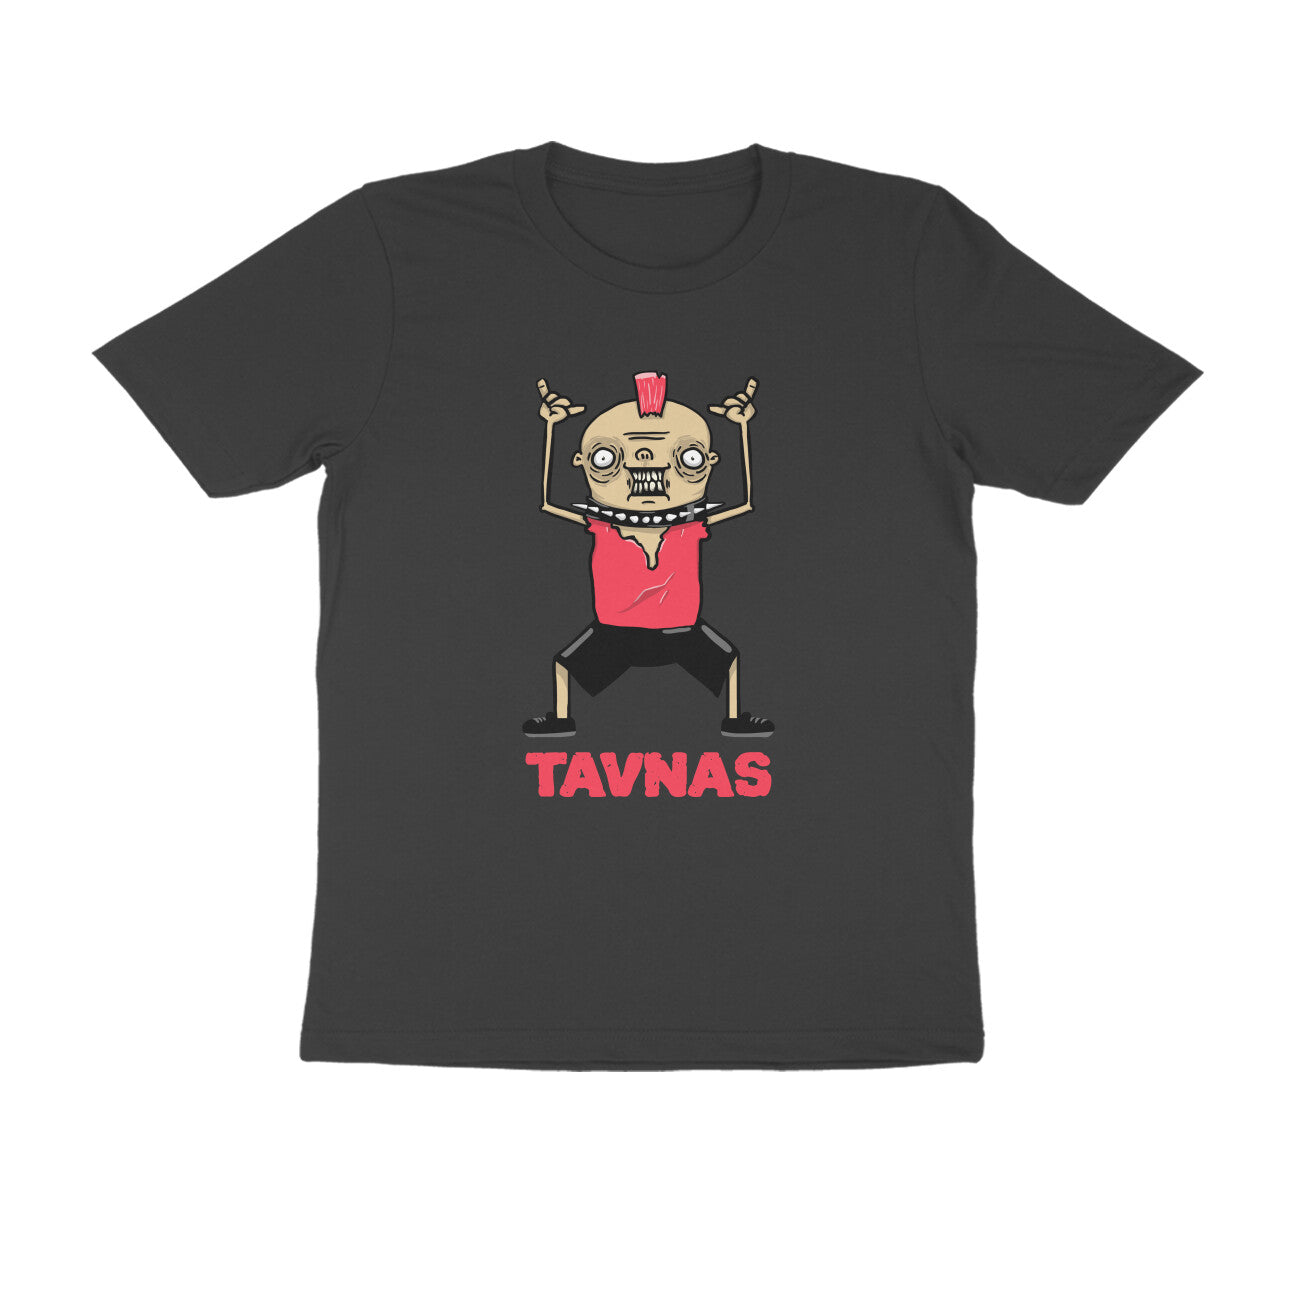 TAVNAS MEN'S LIFESTYLE COLLECTION GENT - Goa Shirts